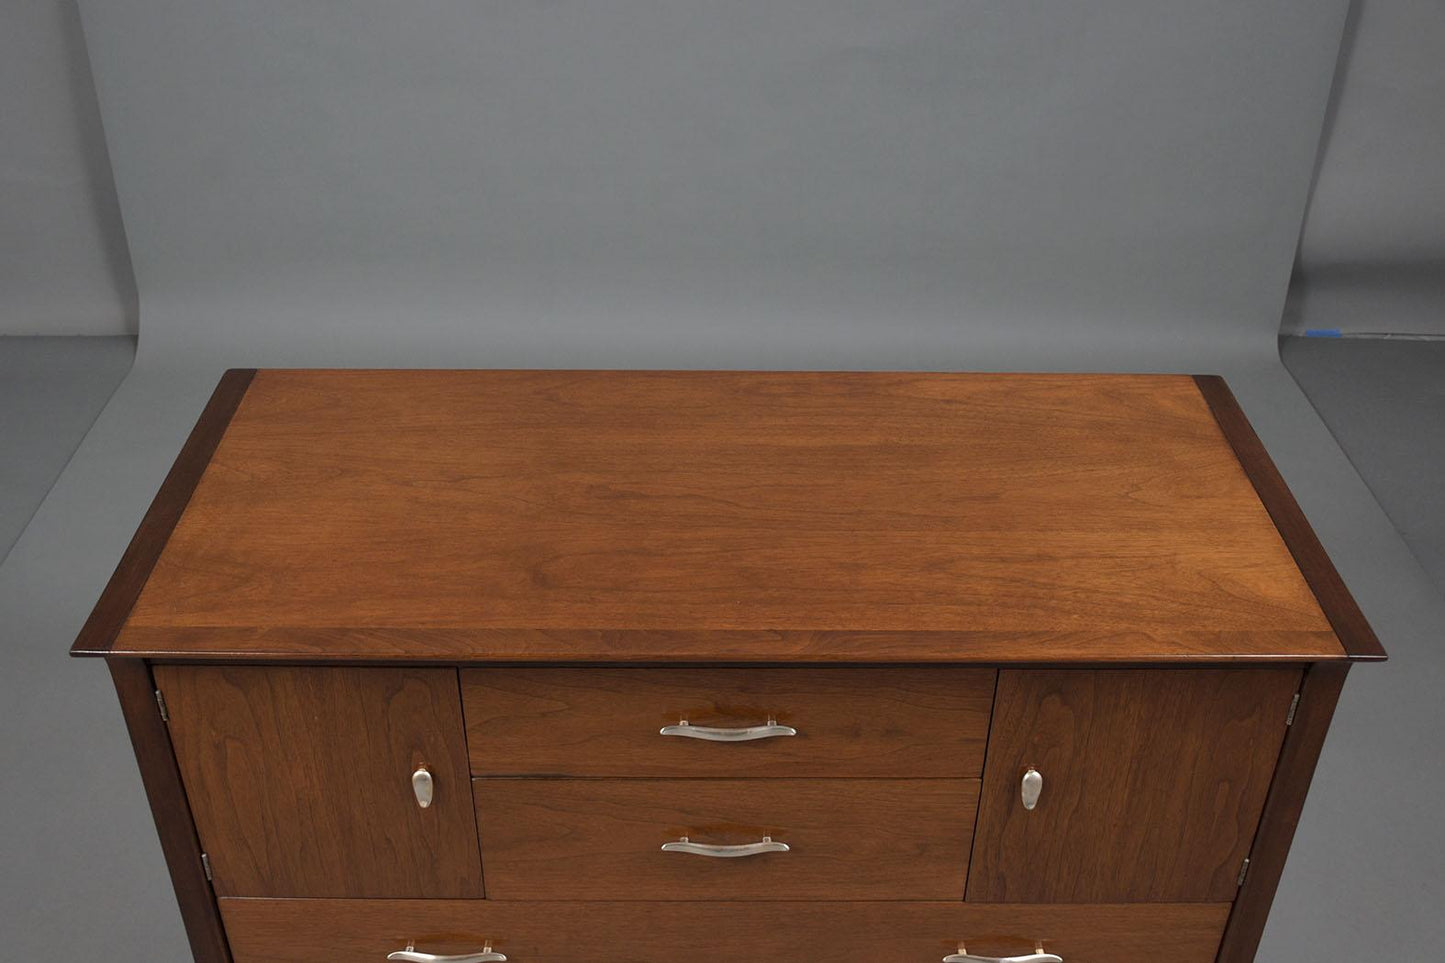 1960s Mid-Century Modern Walnut Dresser: Vintage Elegance Meets Functionality